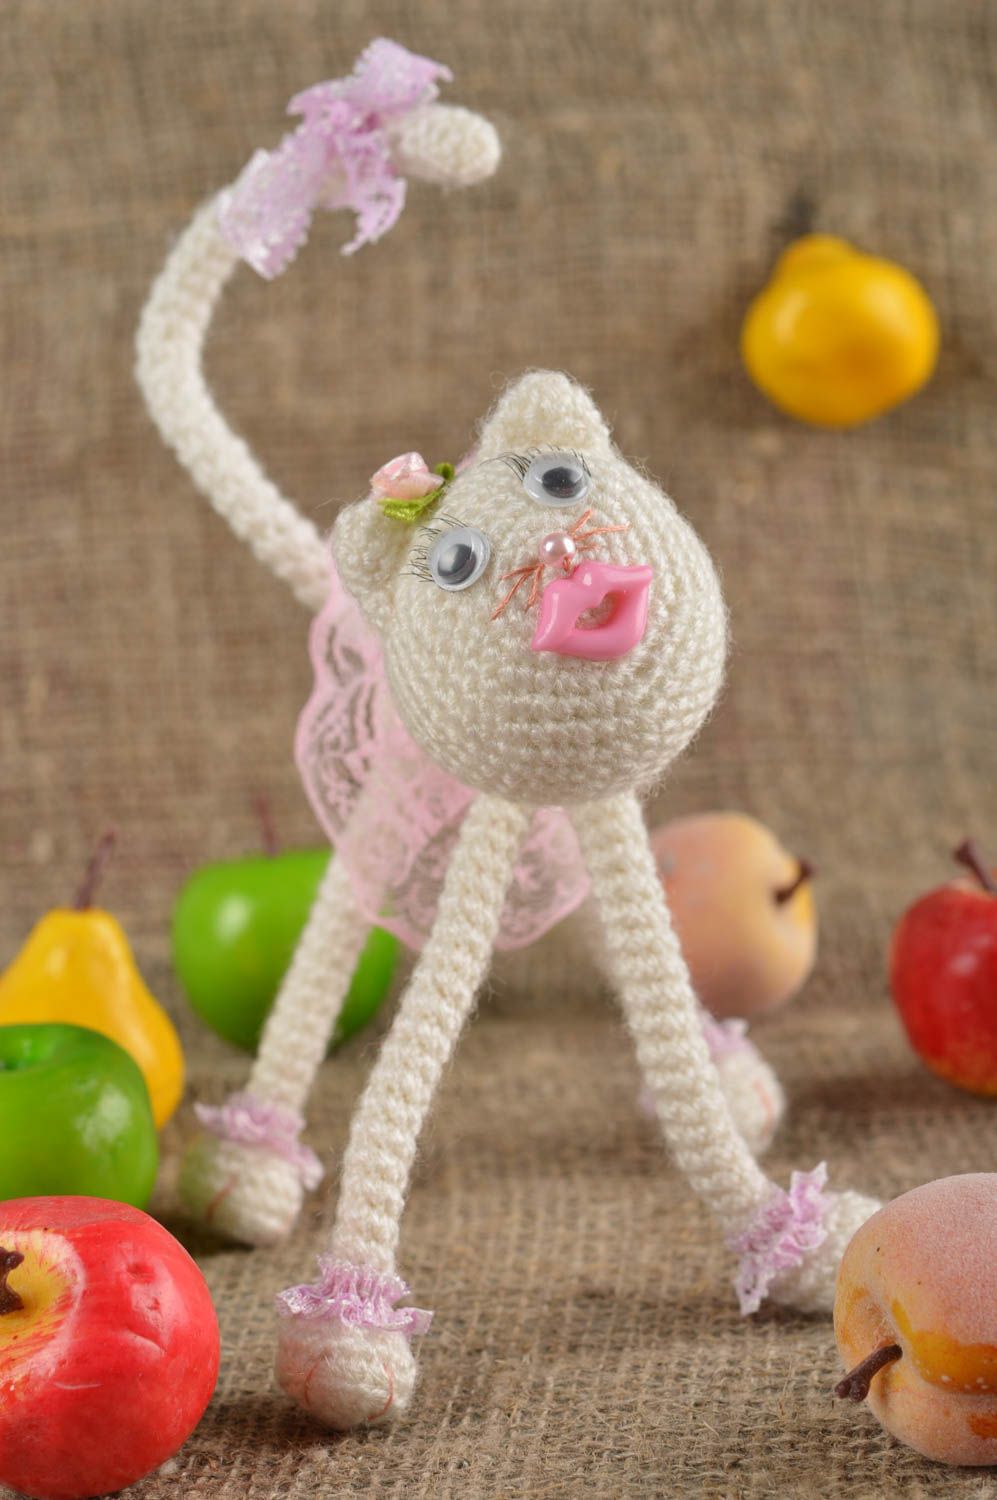 Hand-crocheted creative toy handmade designer toy for babies nursery decor photo 1